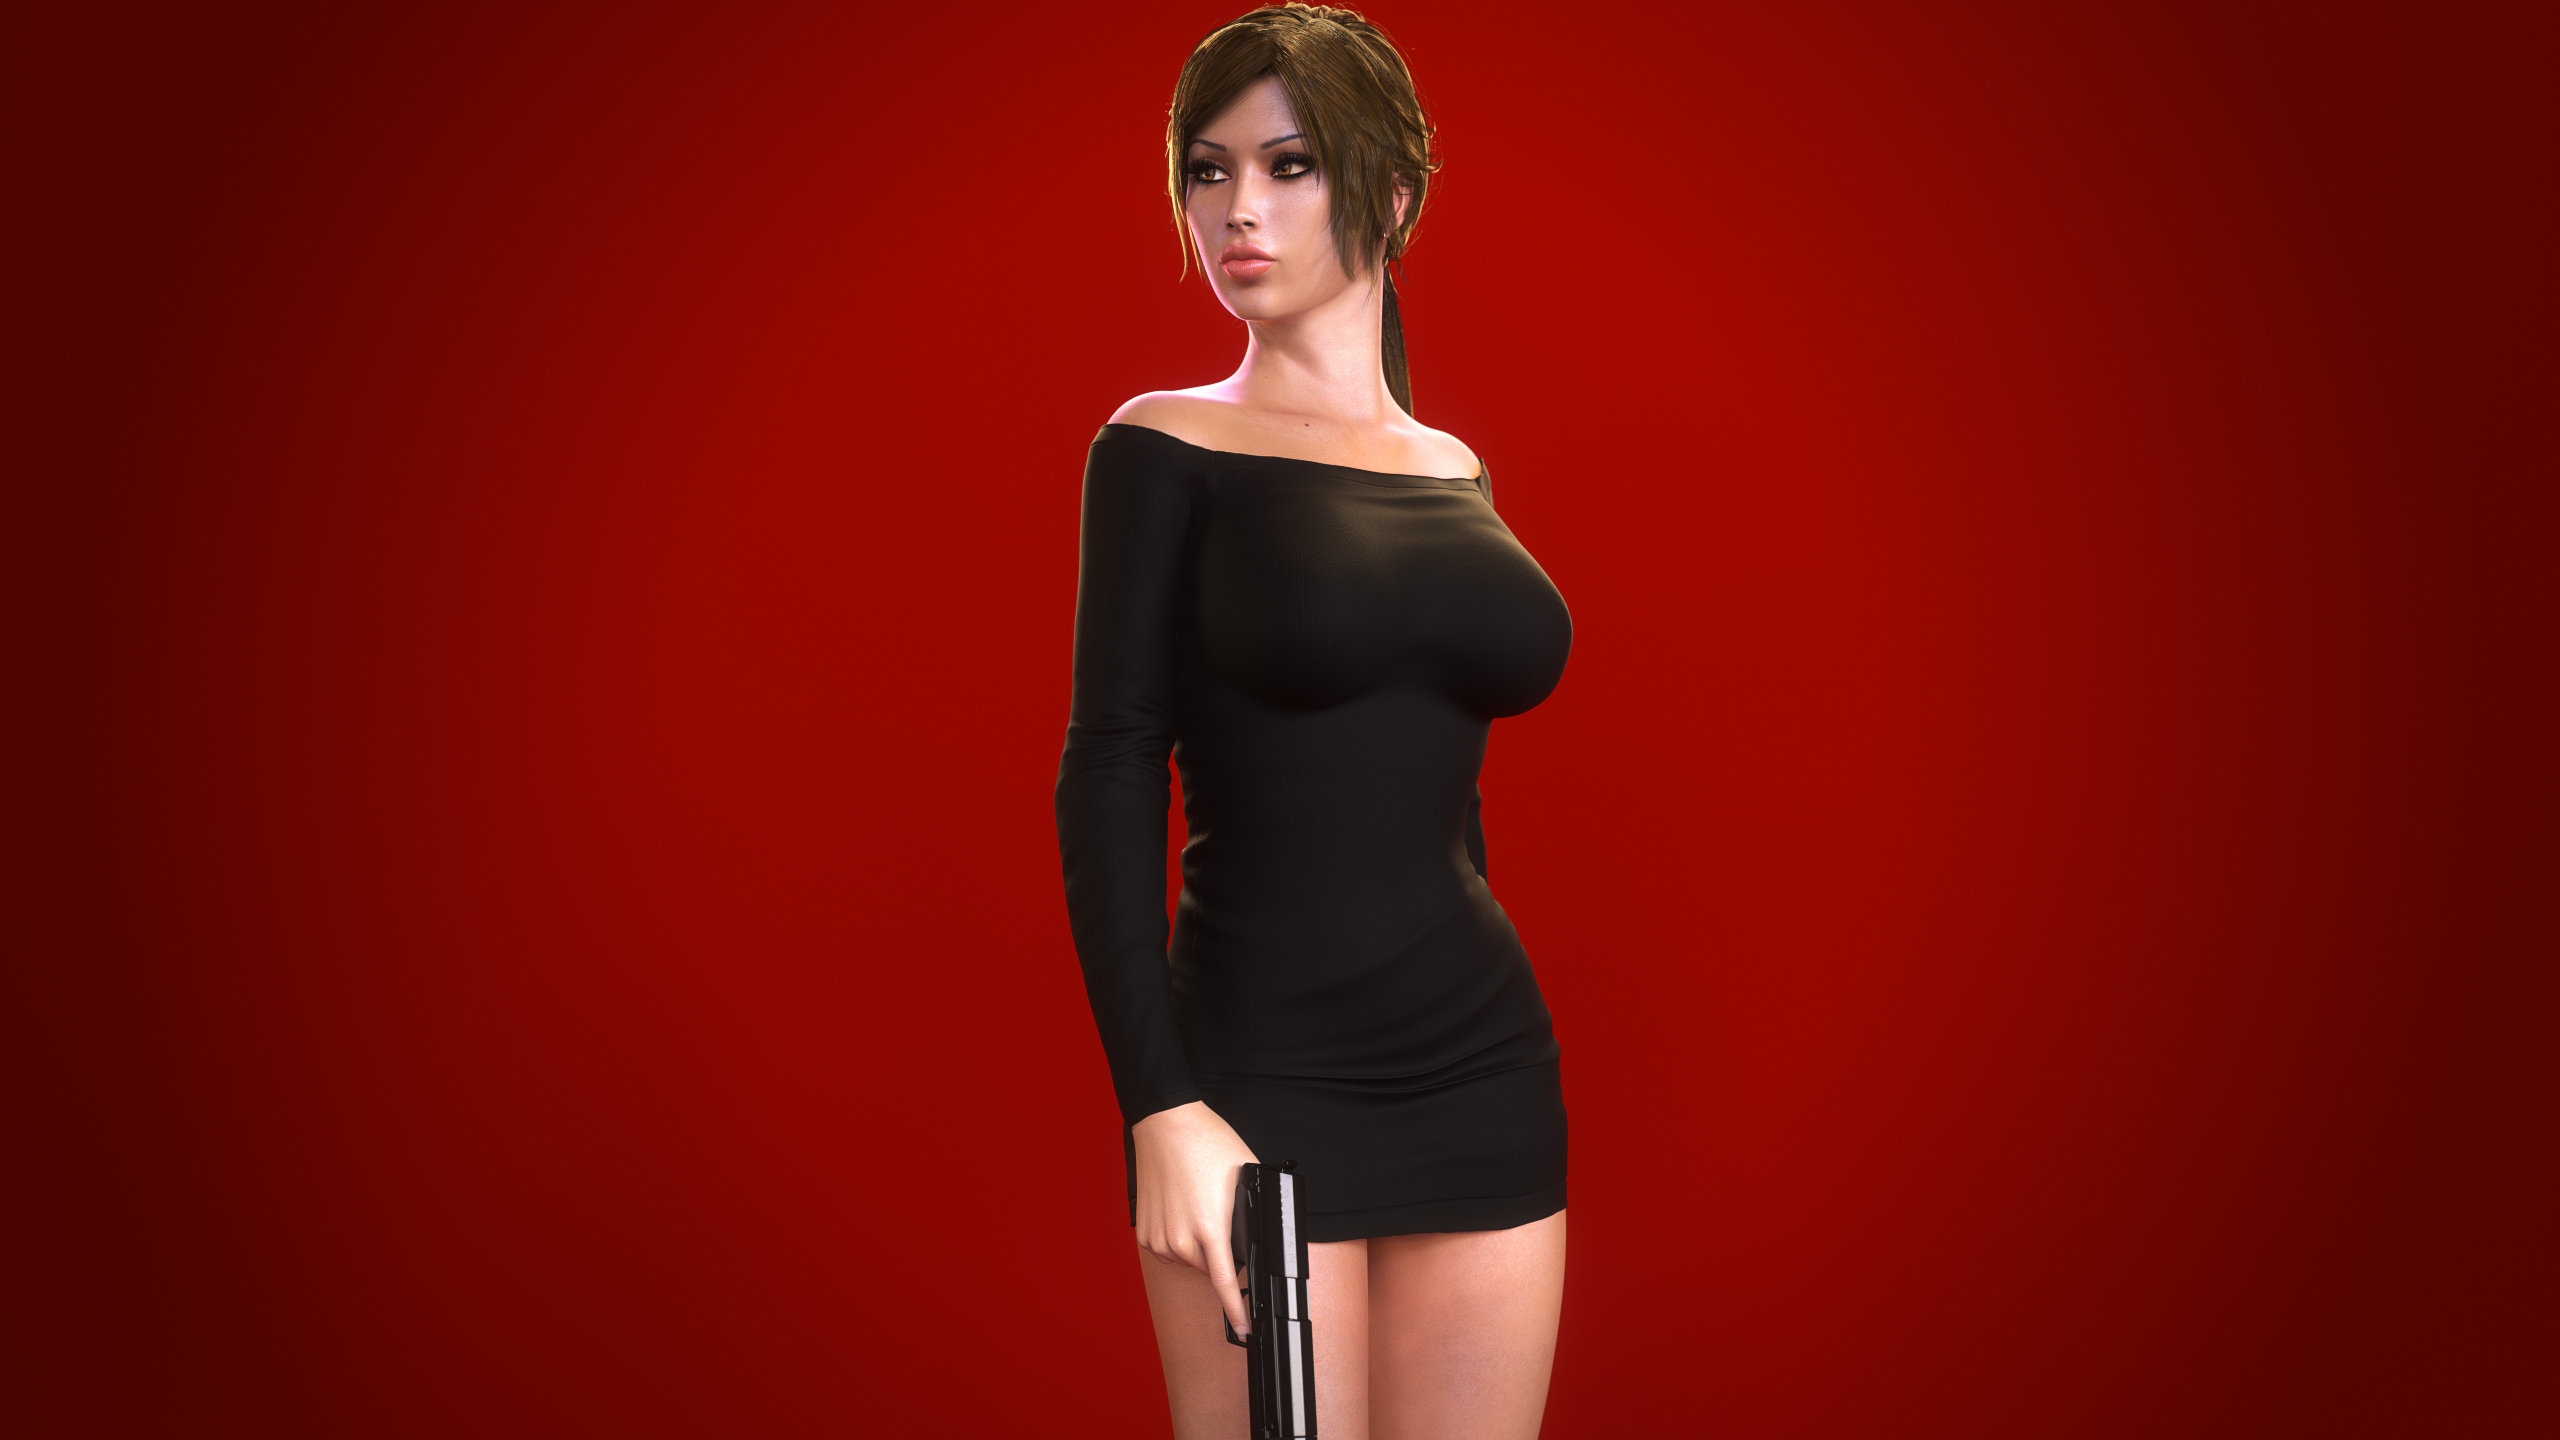 Video Game Tomb Raider 2560x1440